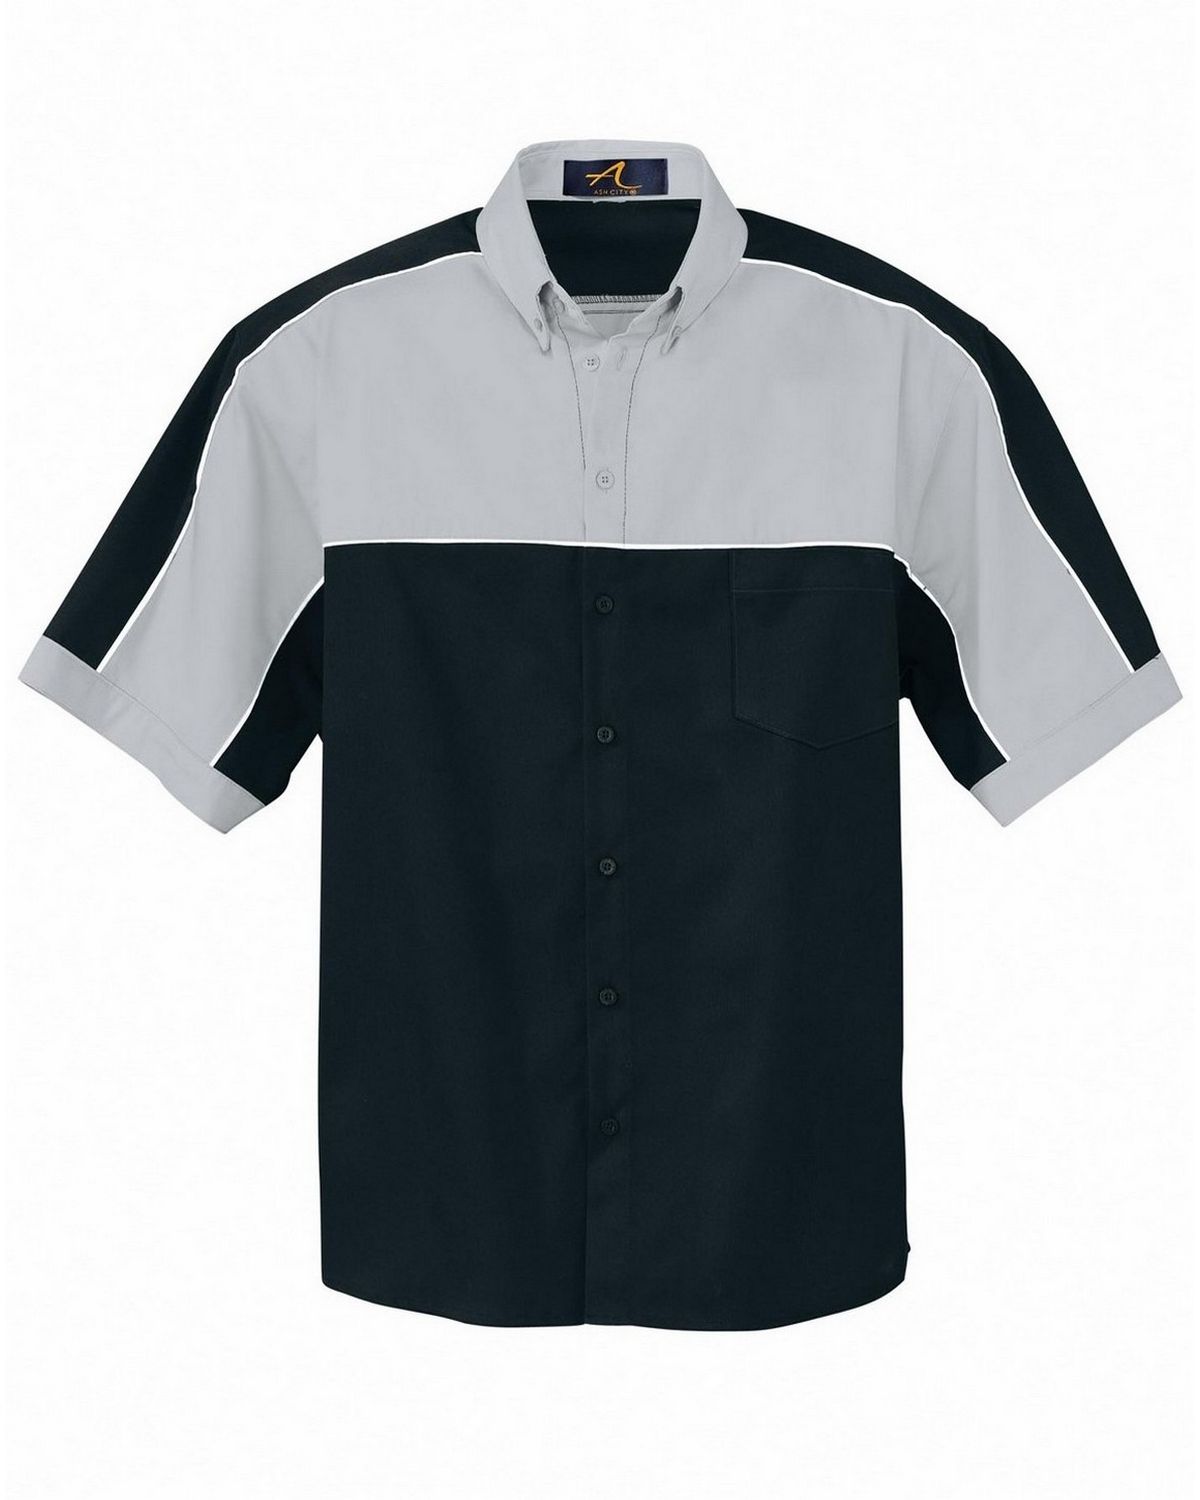 Ash City 87013 Men's Color Block Short Sleeve Shirt